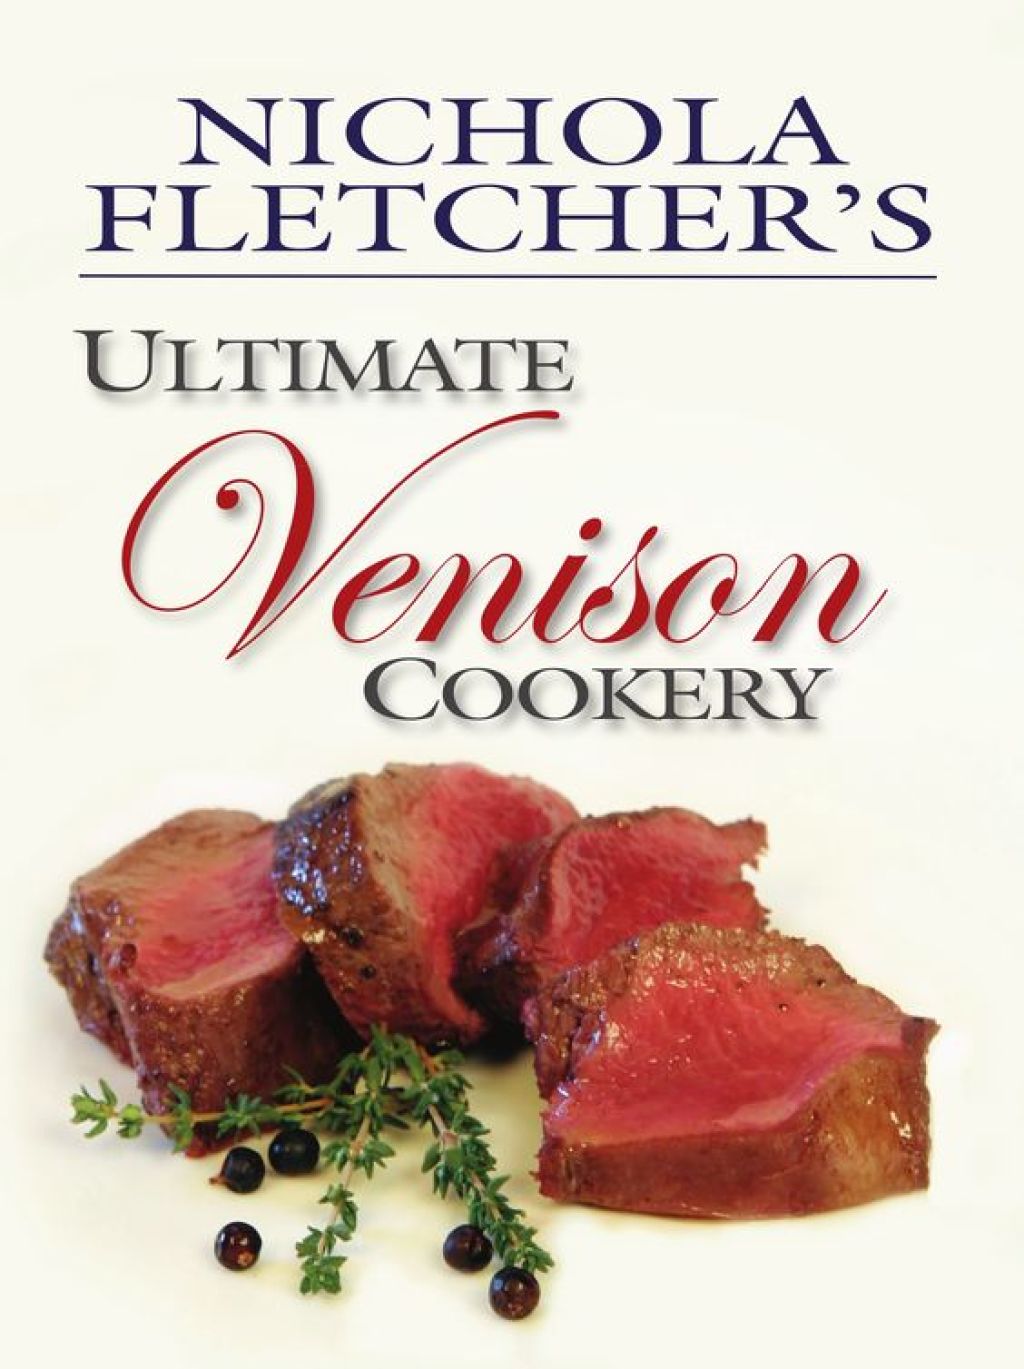 Nichola Fletcher's Ultimate Venison Cookery (eBook) - Nichola Fletcher,